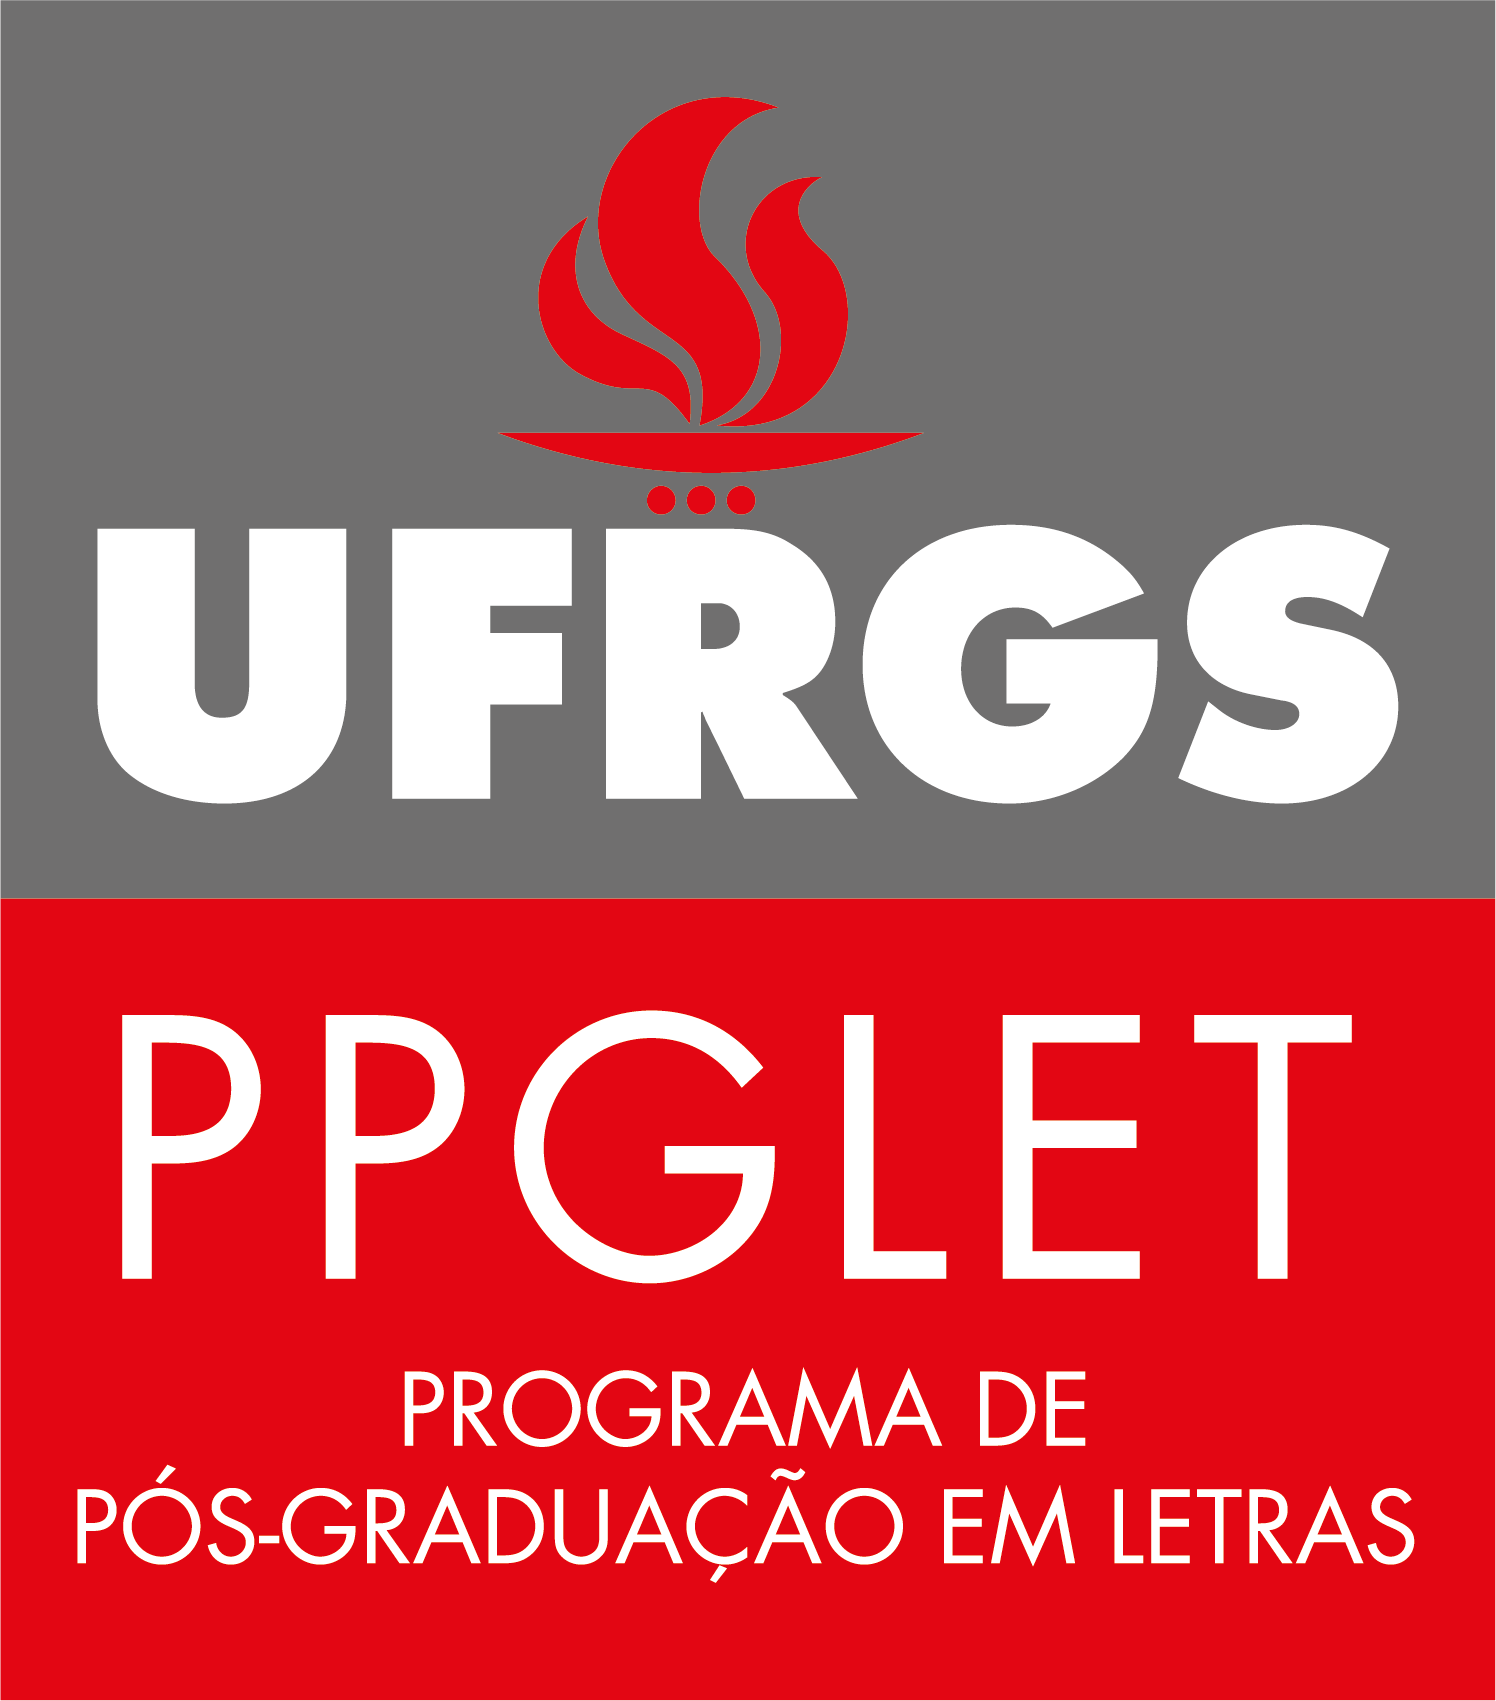 PPG Letras UFRGS